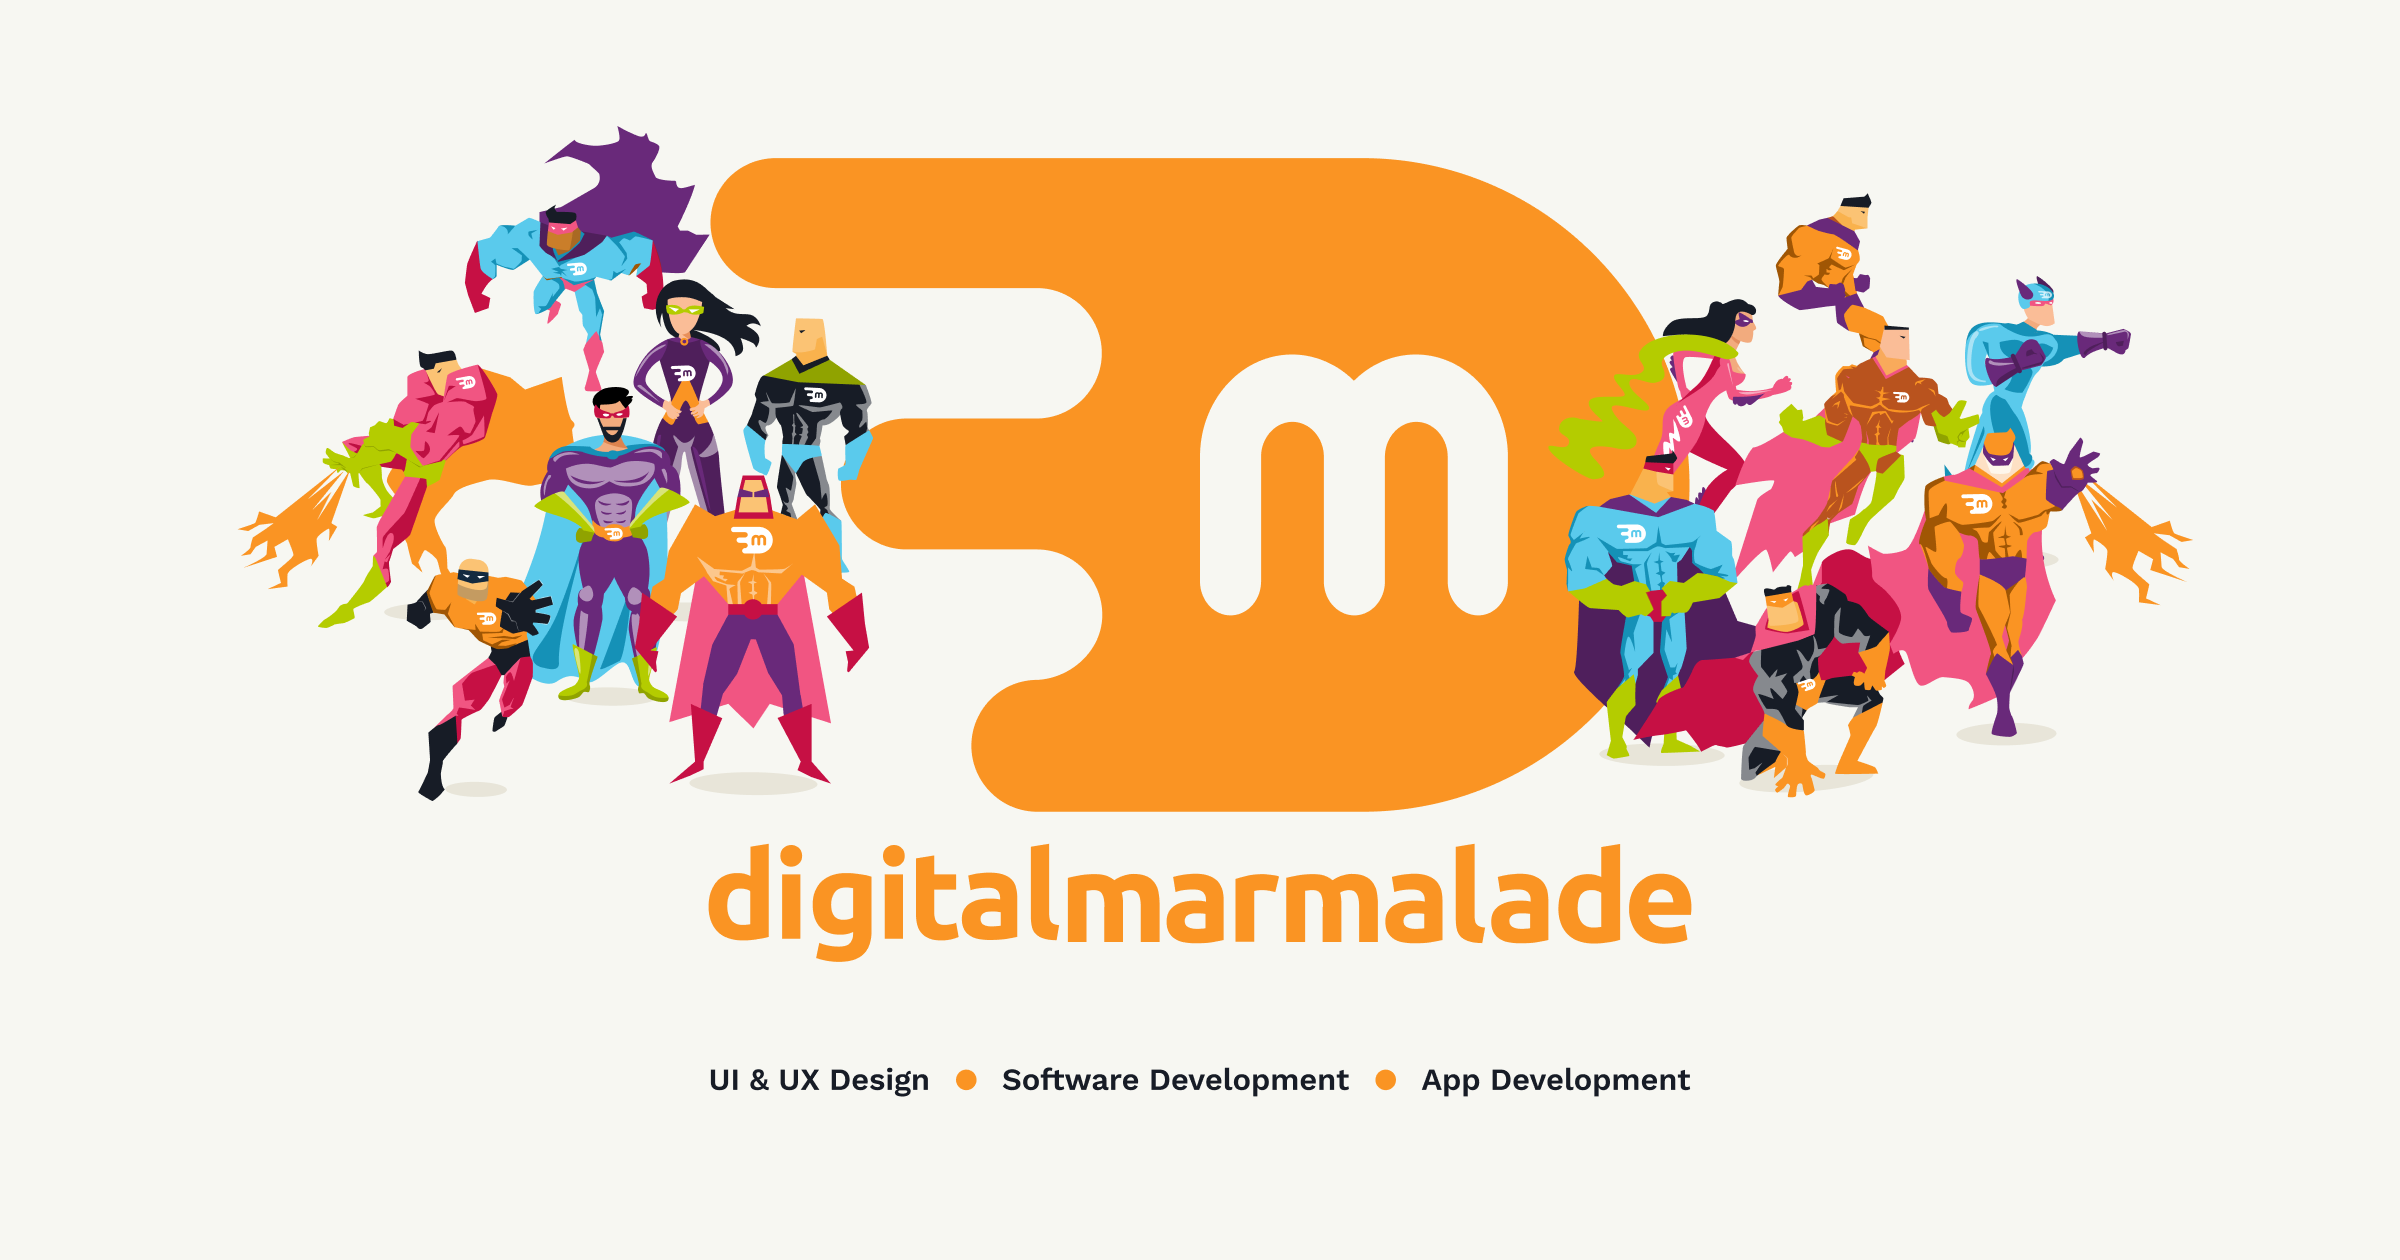 Digital Marmalade - Software Development Super-heroes